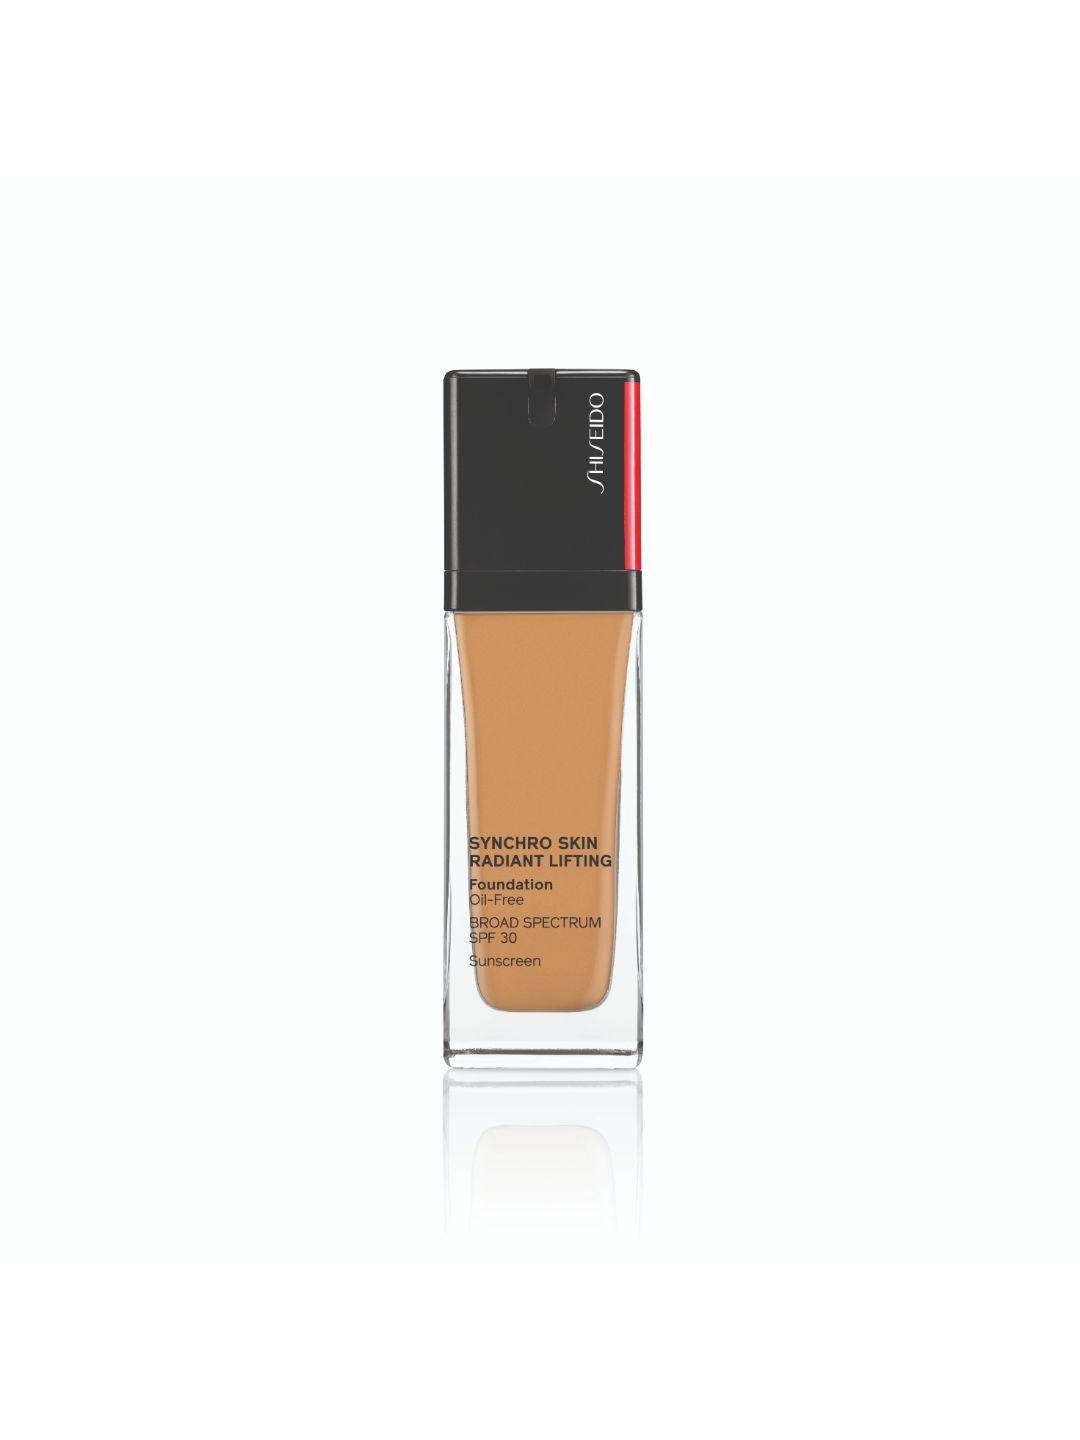 shiseido synchro skin radiant lifting foundation with spf 30 - citrine 360